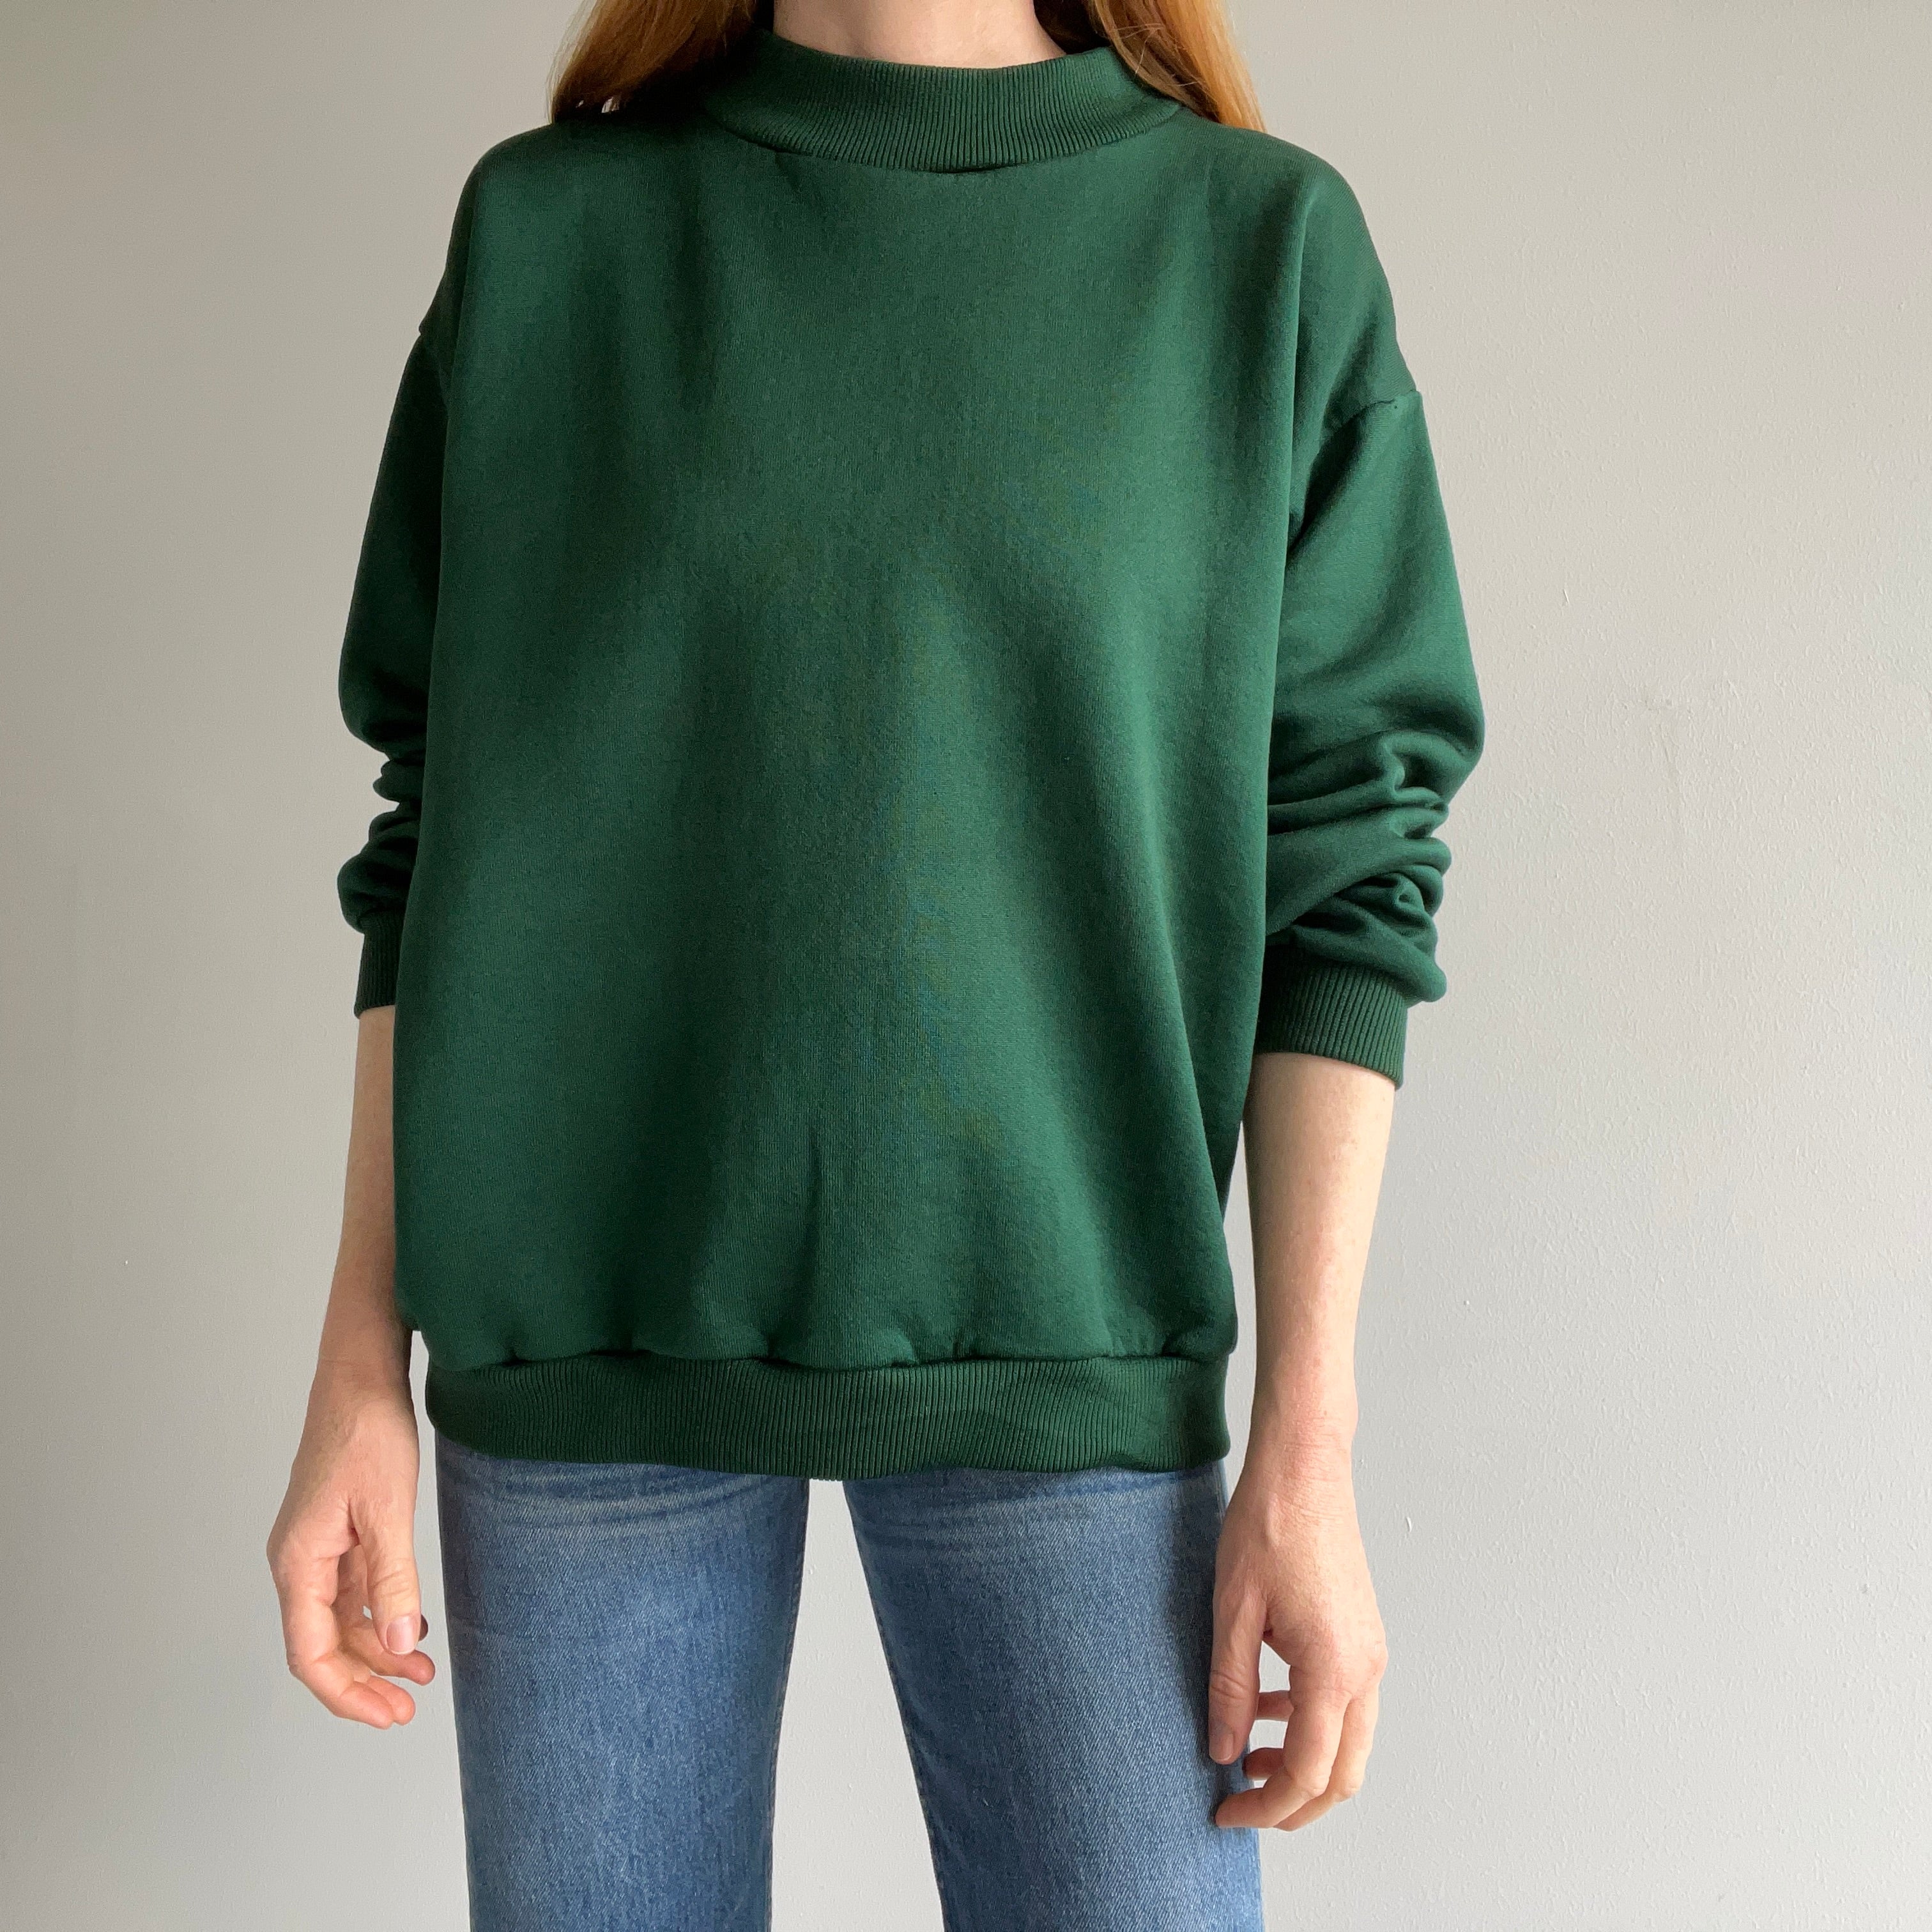 1980s Dark Green Sweatshirt with a Slight Sheen